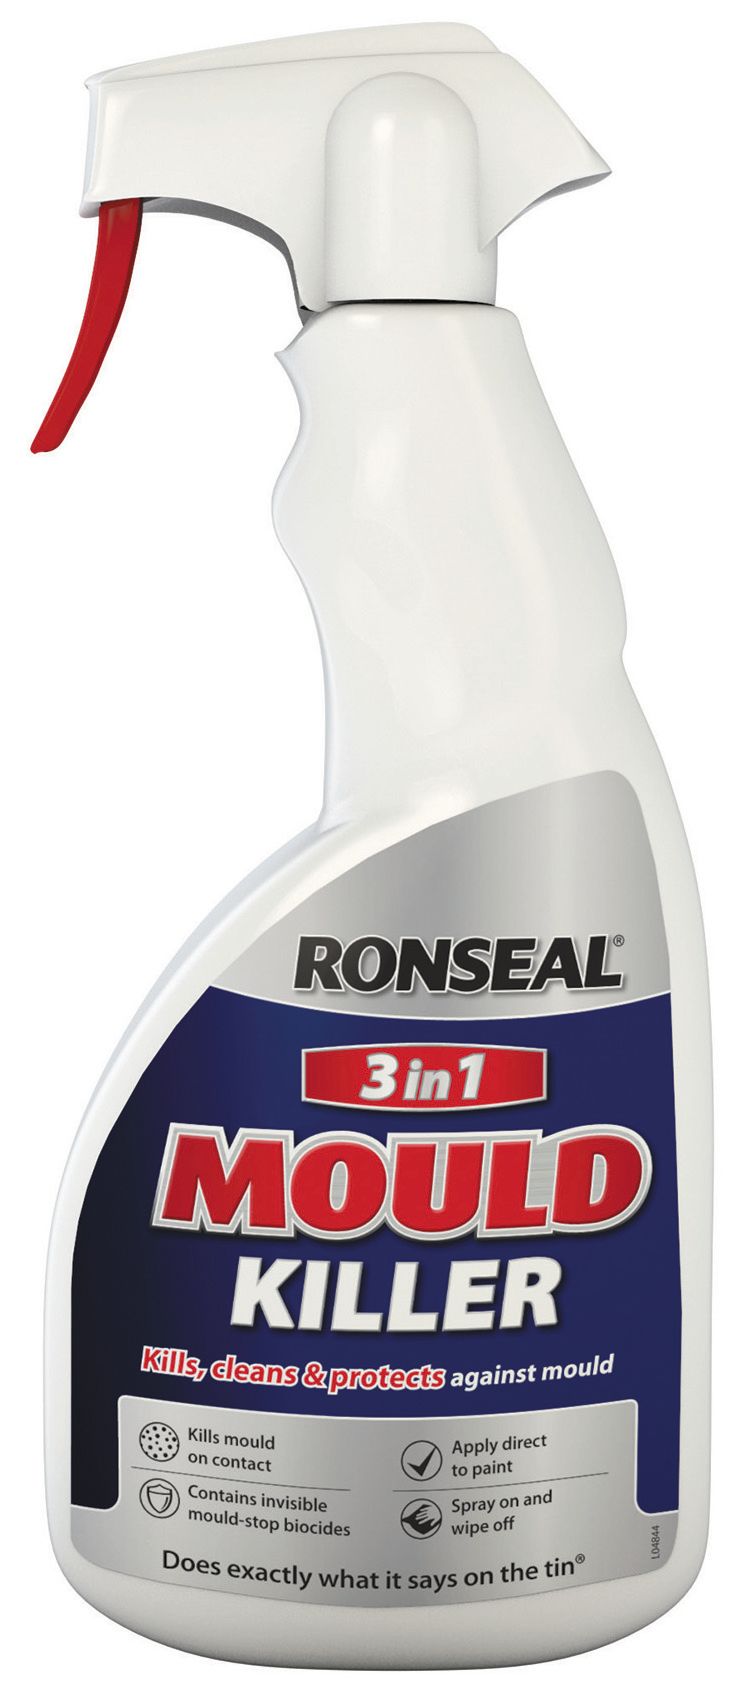 Ronseal 3-in-1 Mould Killer - 500ml